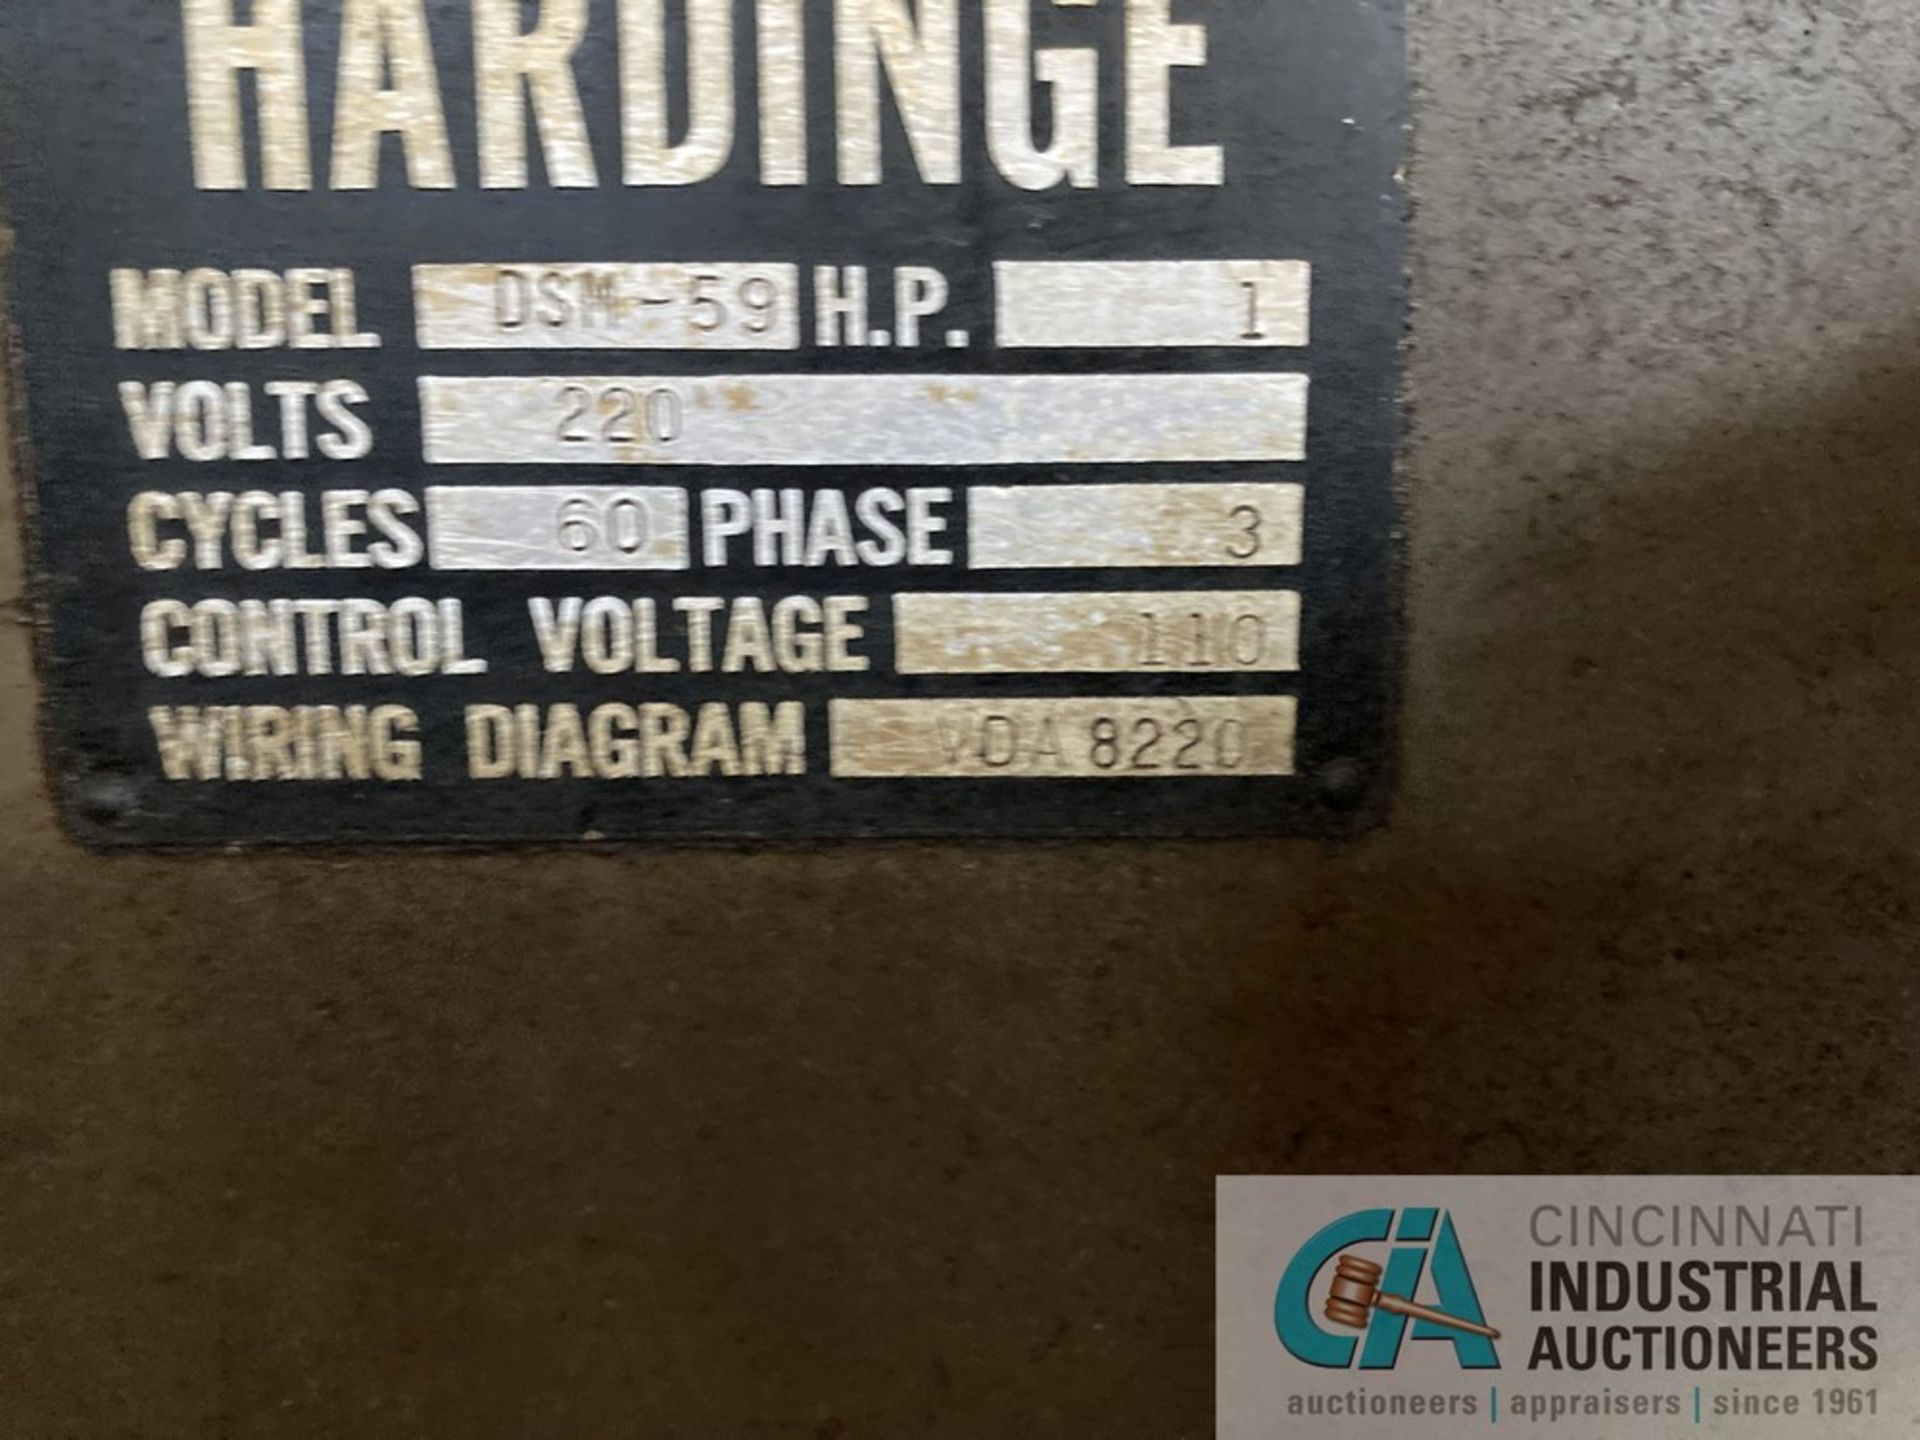 HARDINGE MODEL DSM-59 TOOLROOM LATHE; S/N 10914 - Image 3 of 3